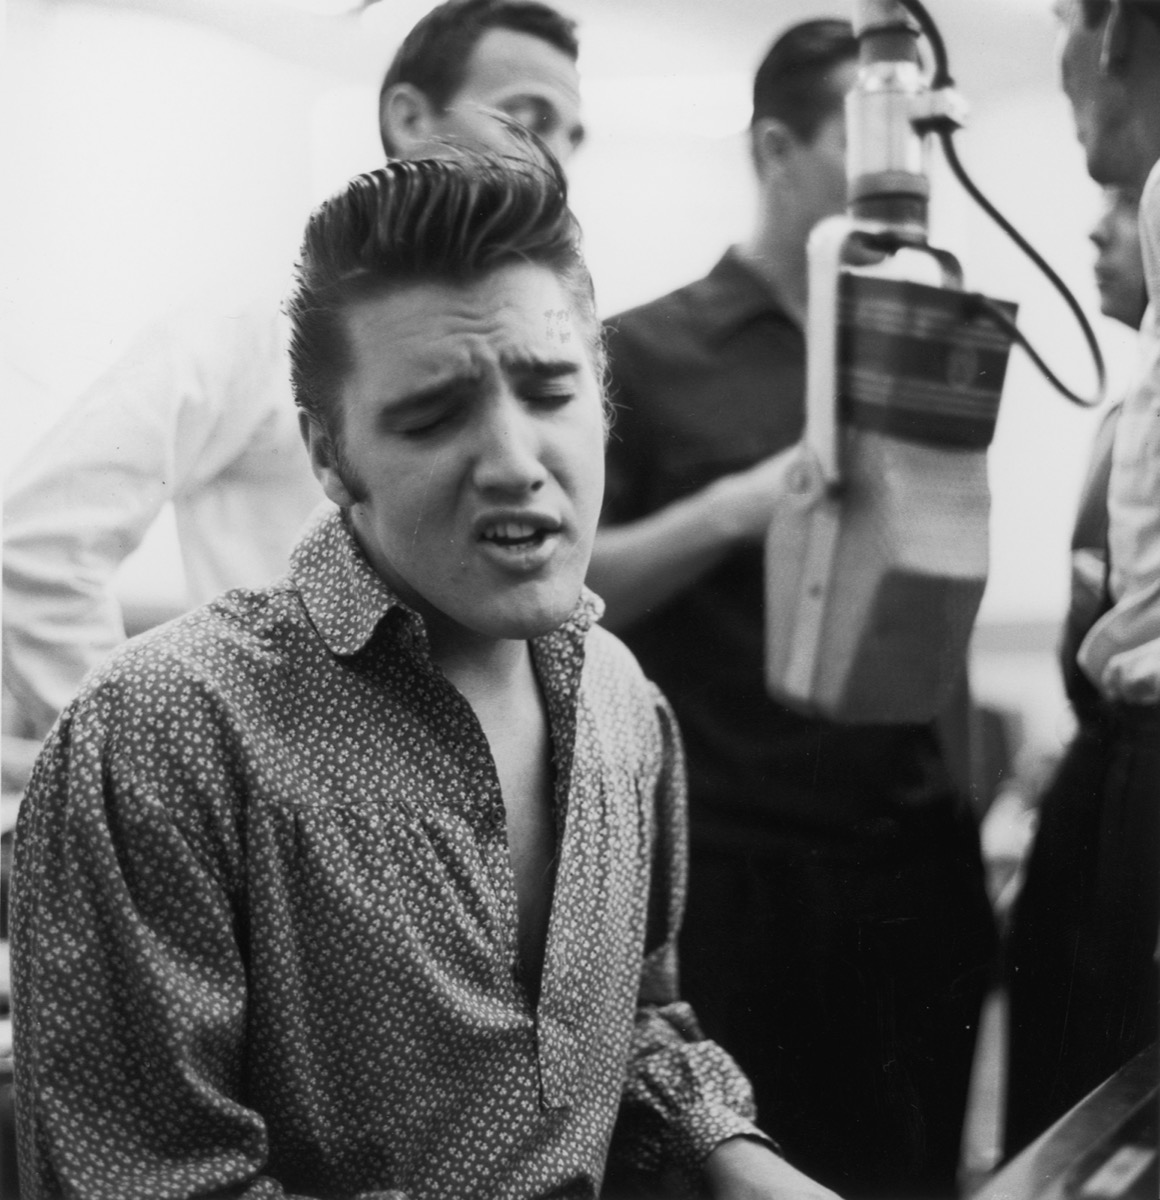 Elvis Presley recording in 1956